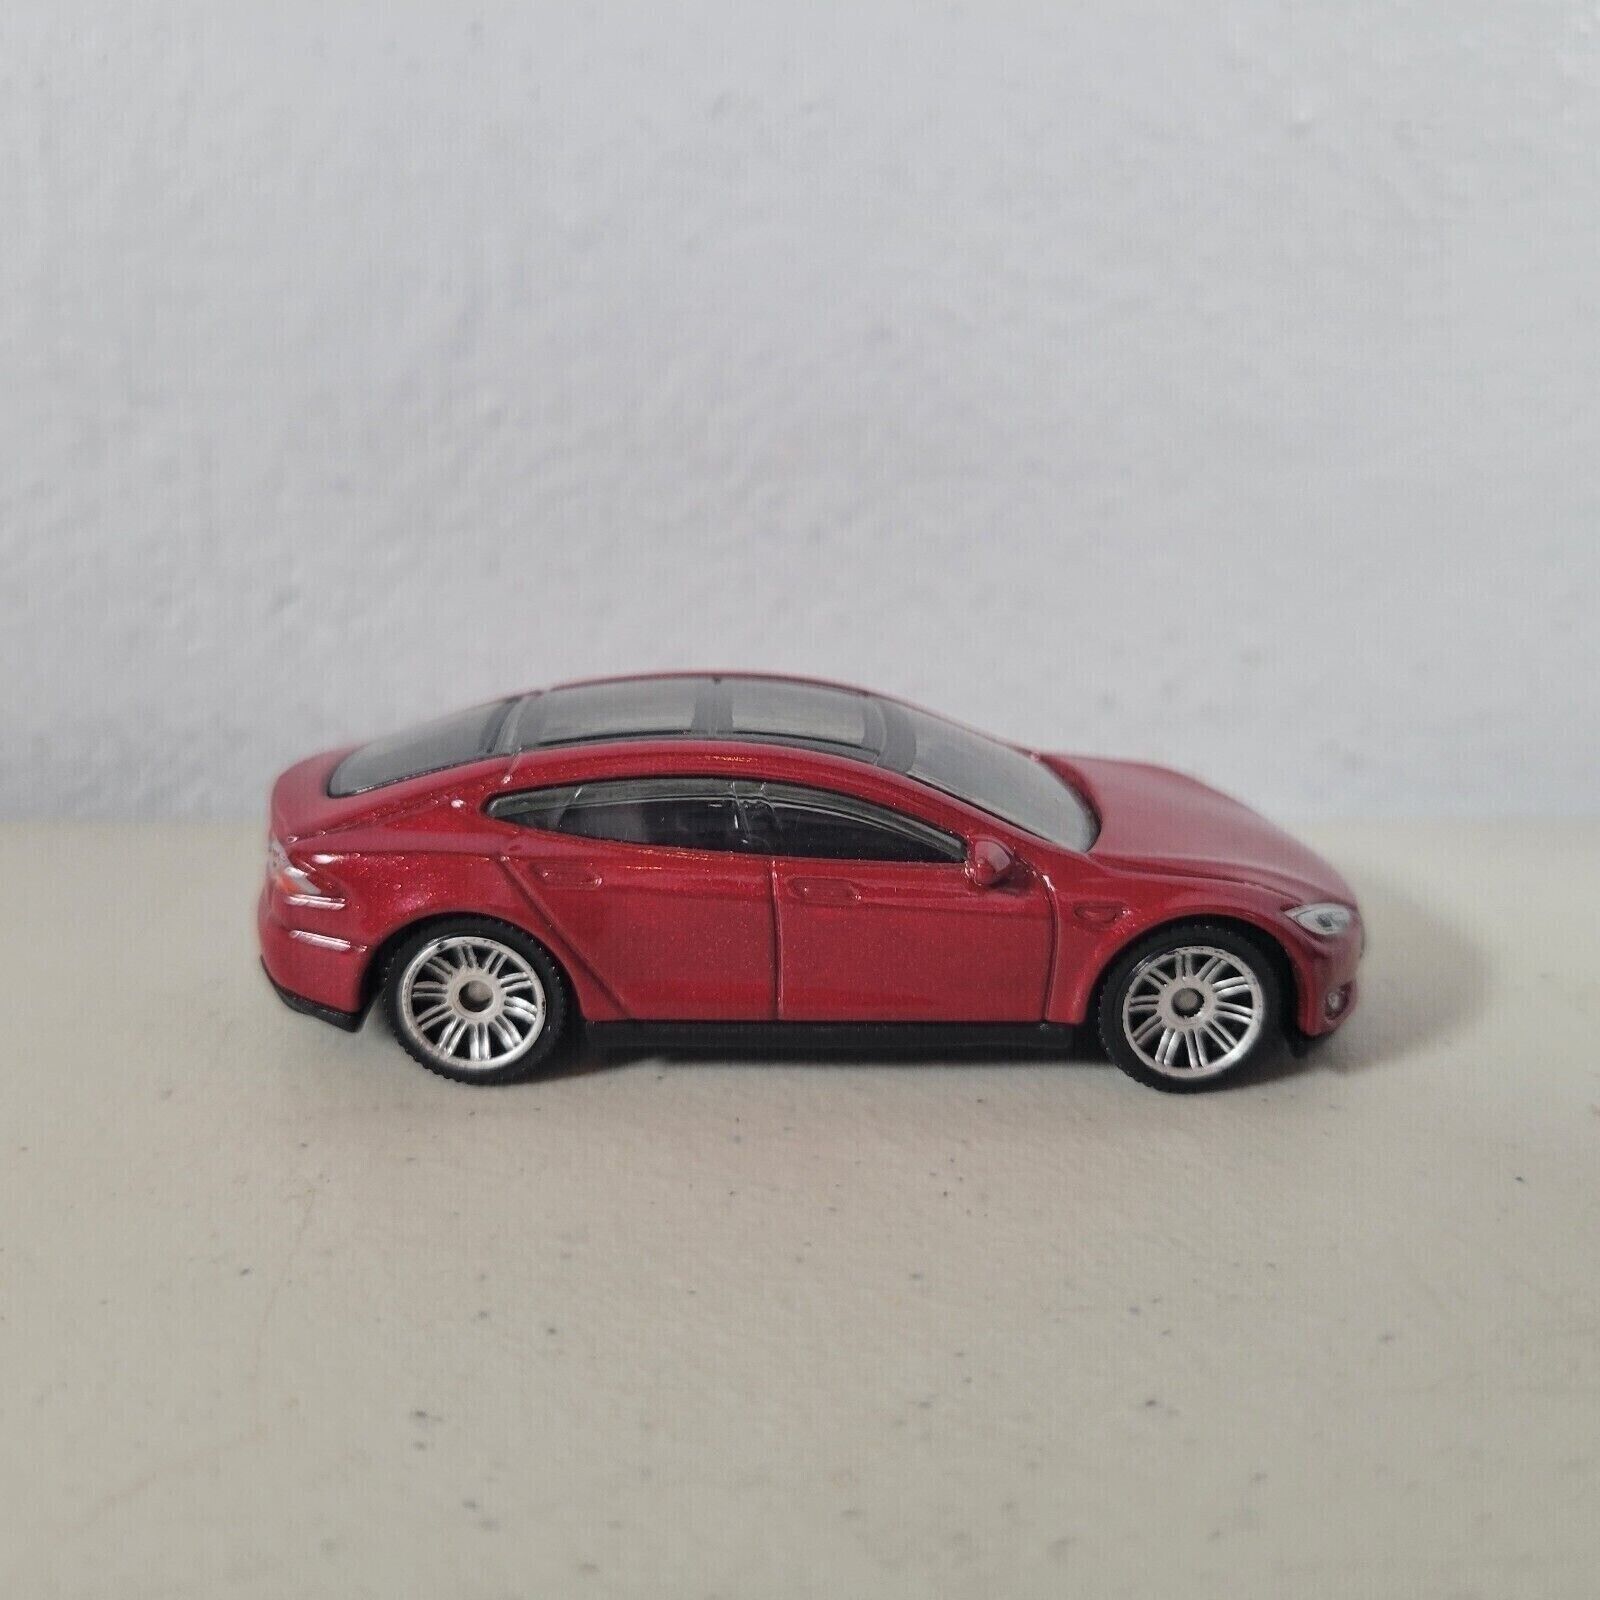 Tesla Roadster Diecast Toy Car Matchbox Burgundy #4/100 2.75" Limited Edition - $9.86